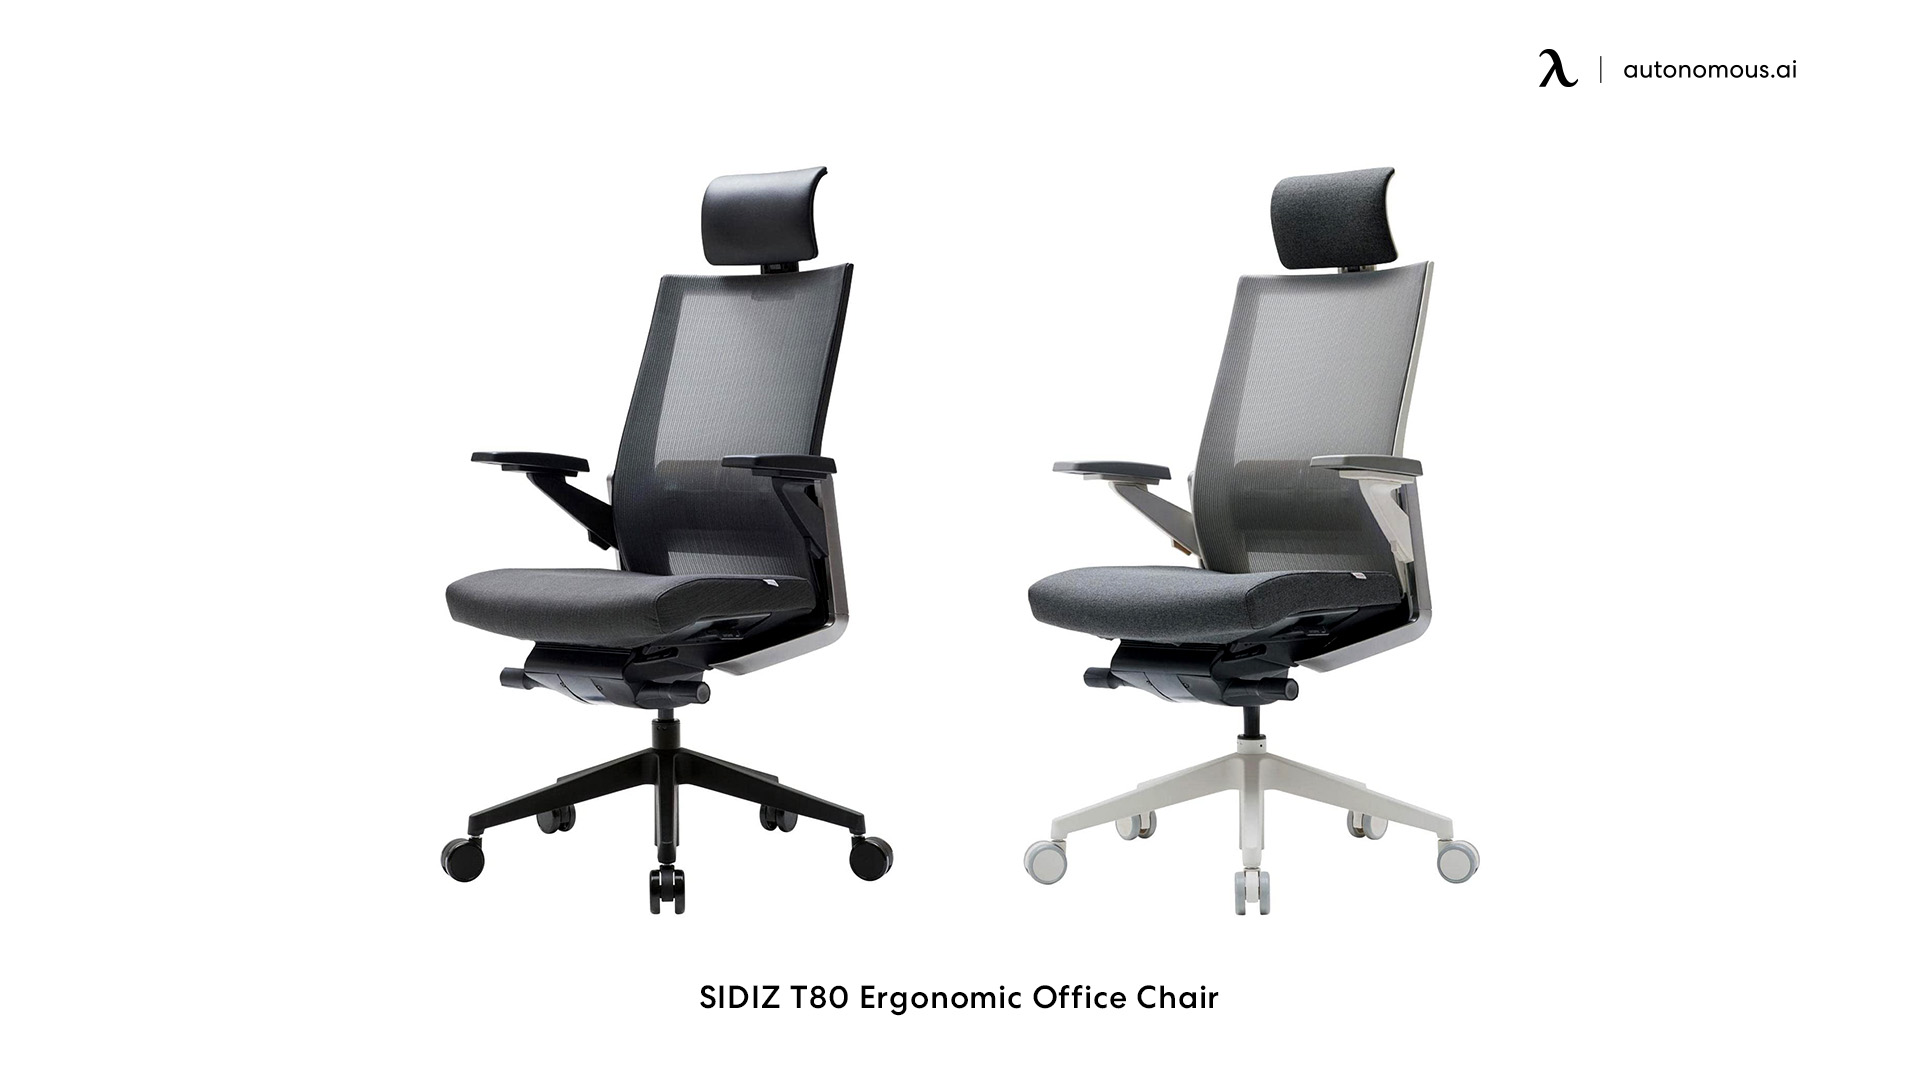 SIDIZ T80 Ergonomic Office Chair